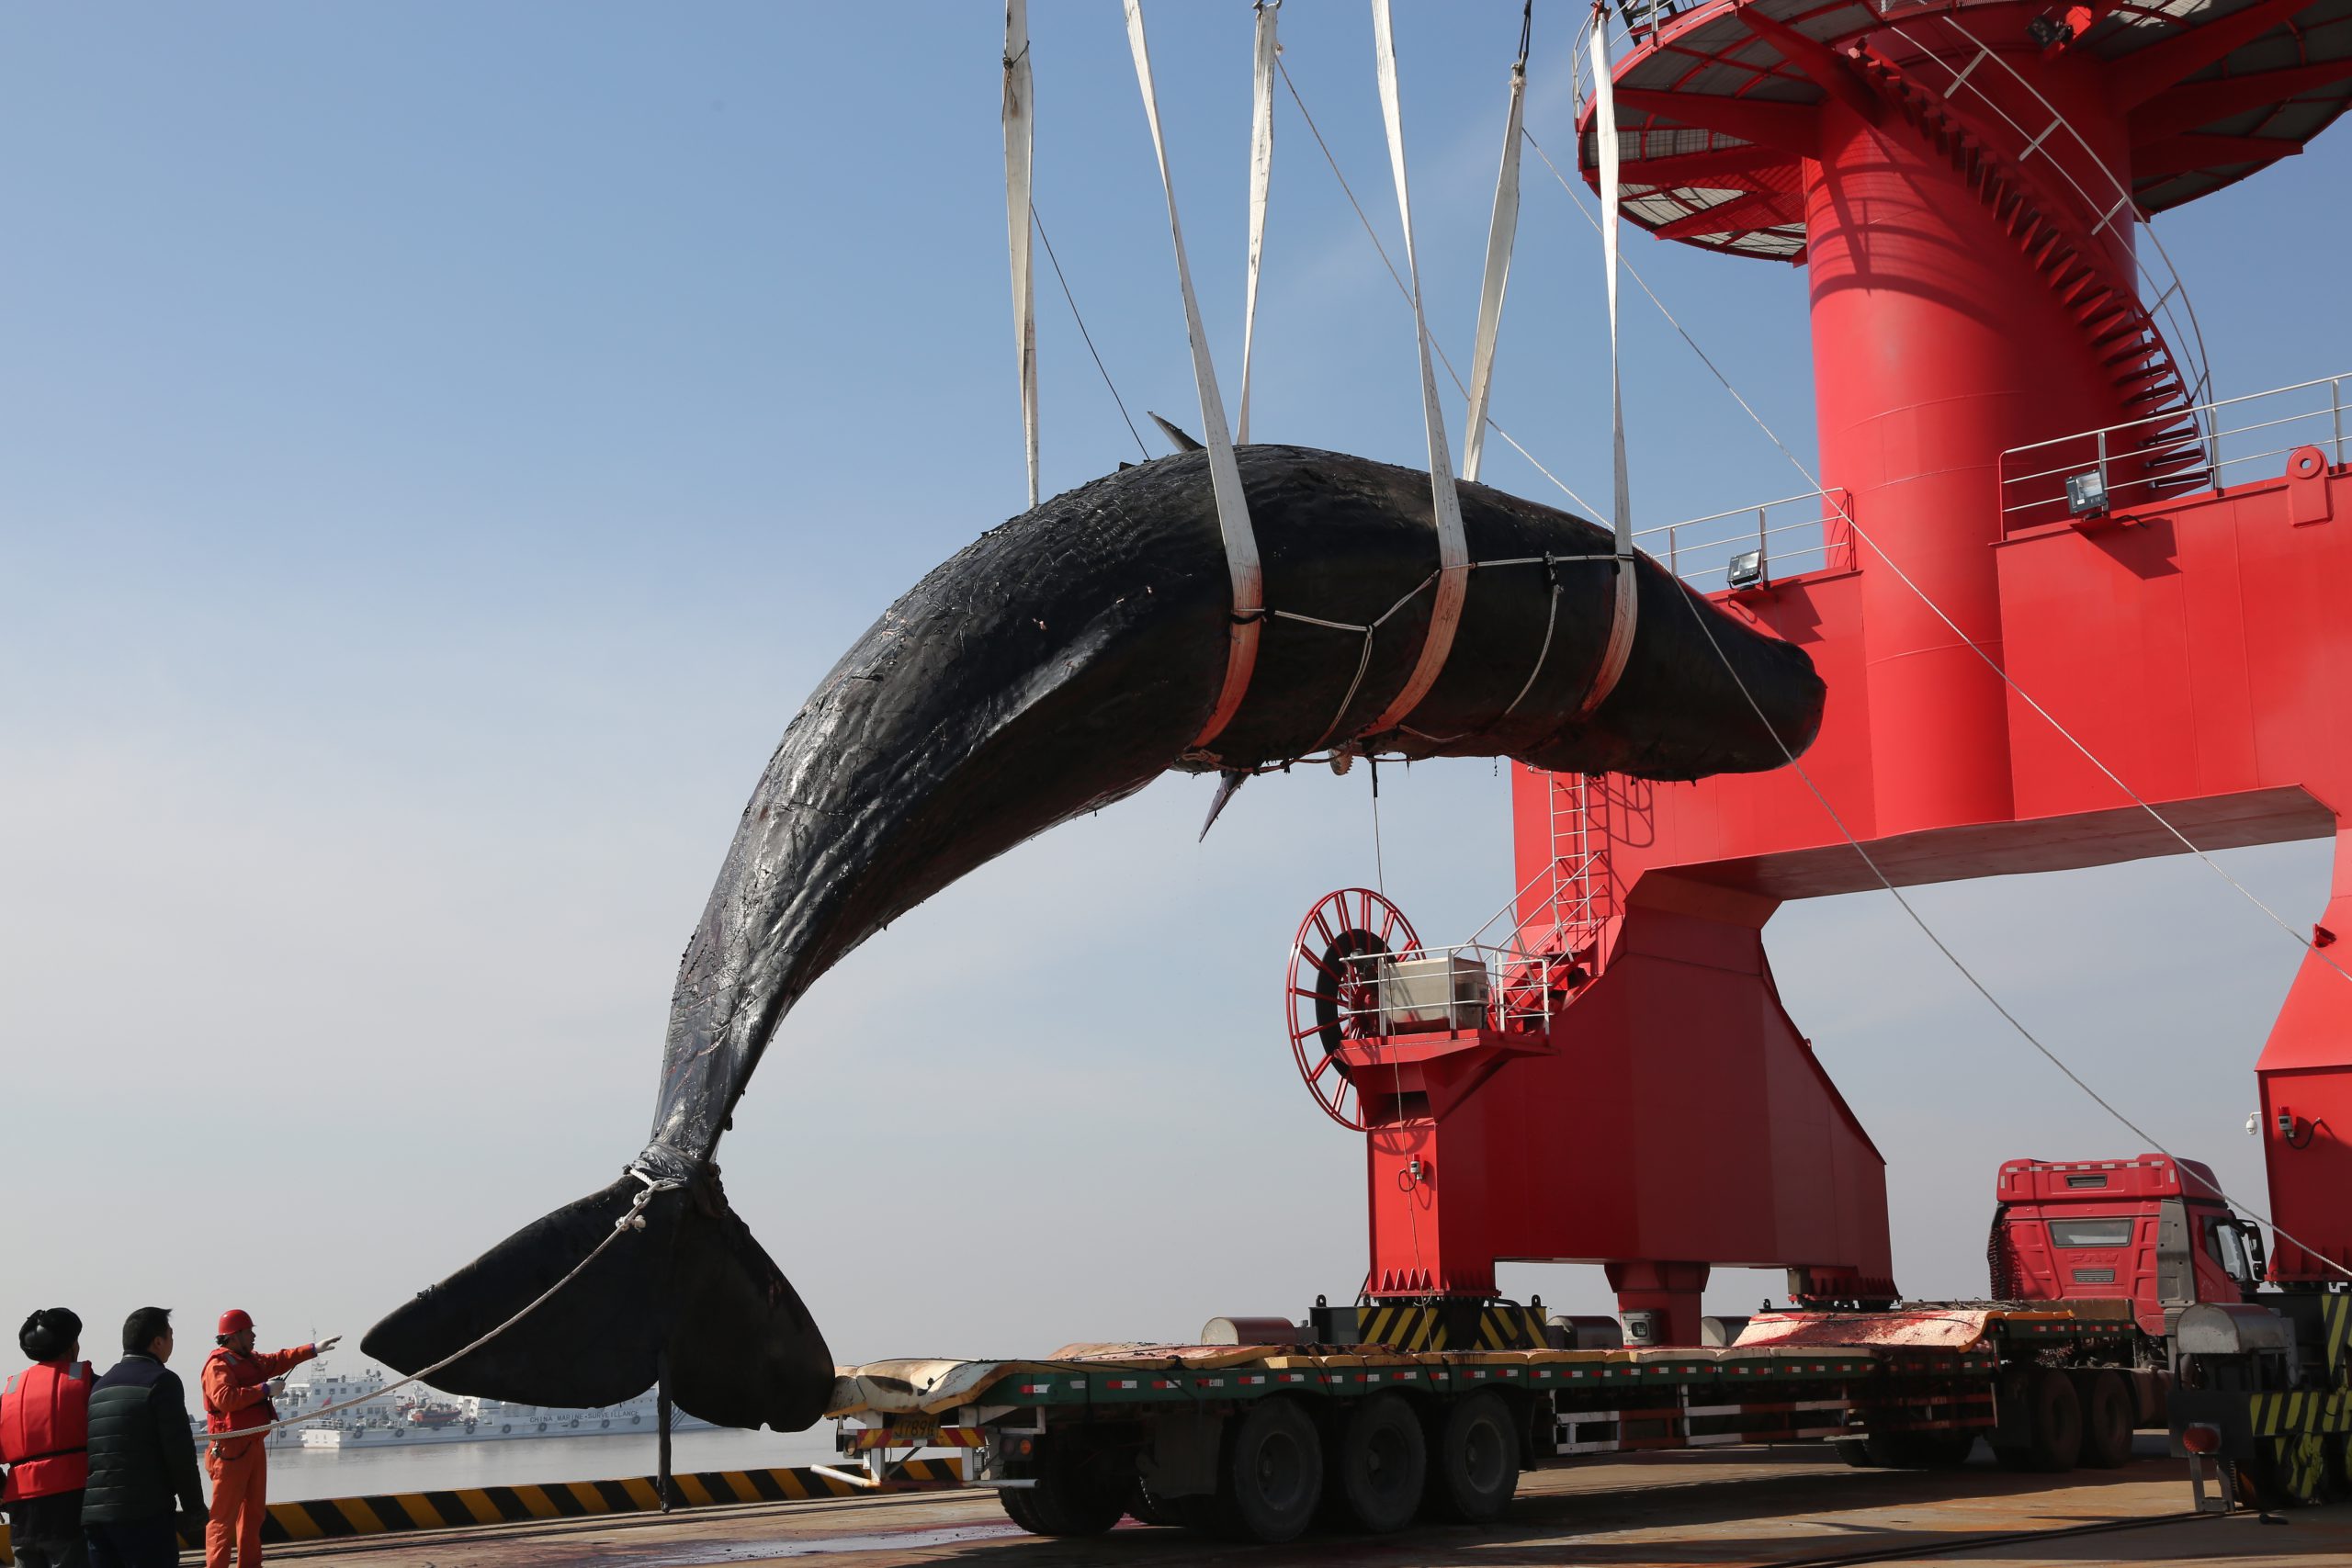 Sperm whale specimen transported back to port